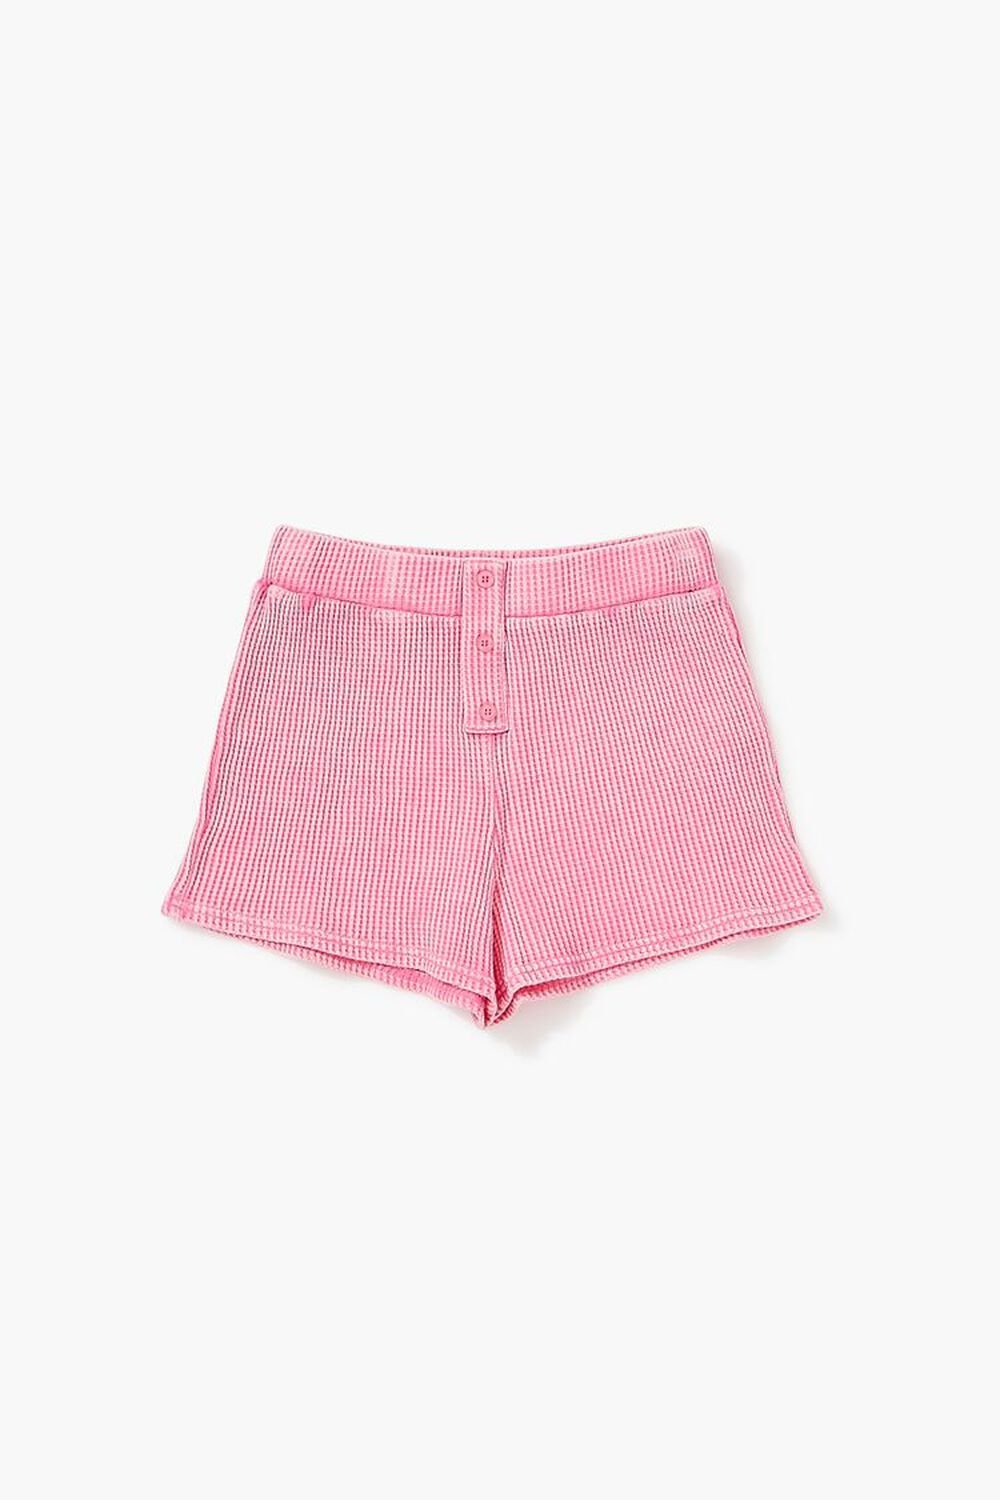 PINK Girls Mineral Wash Shorts (Kids), image 1